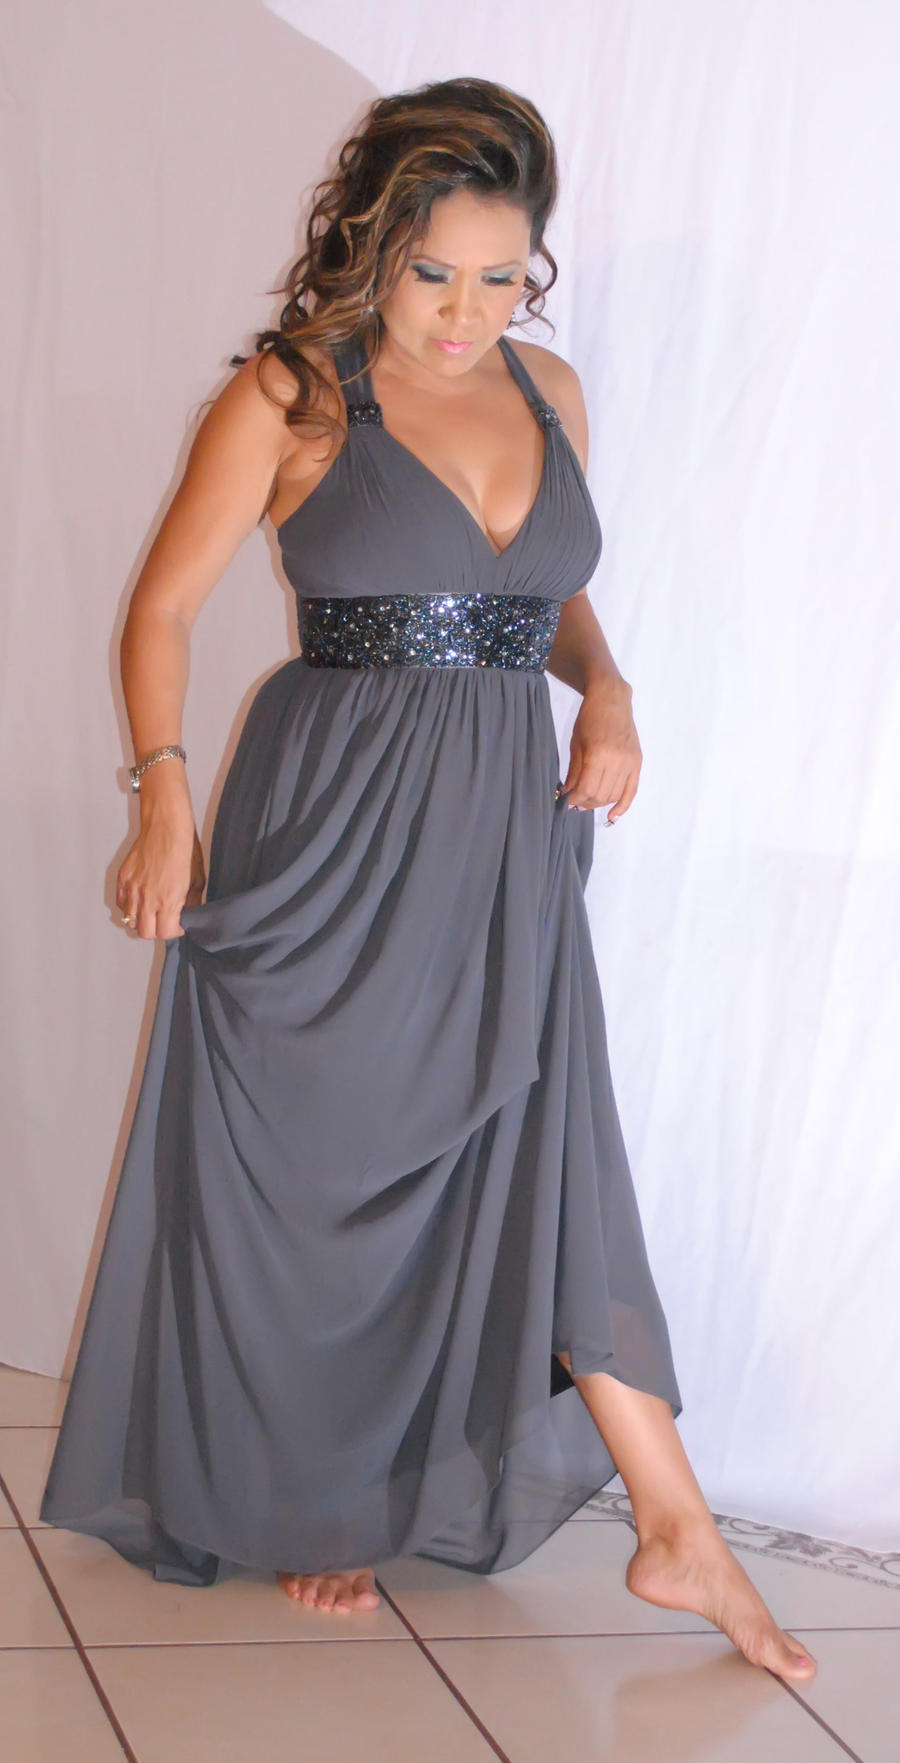 Woman gray dress 1